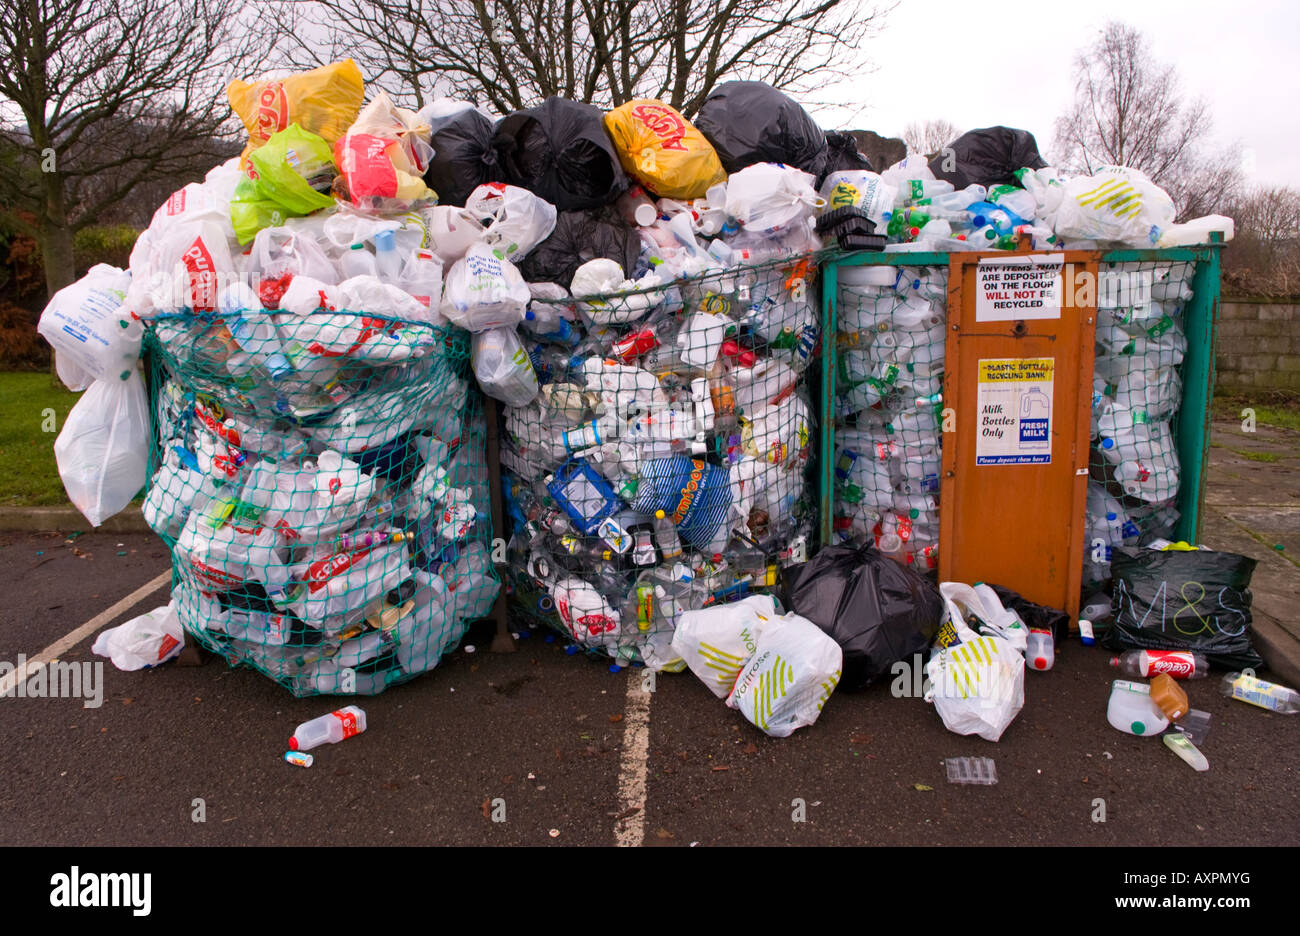 Kunststoff-recycling bank überfüllt mit Plastiktüten auf Parkplatz in  Abergavenny Monmouthshire South Wales UK EU Stockfotografie - Alamy